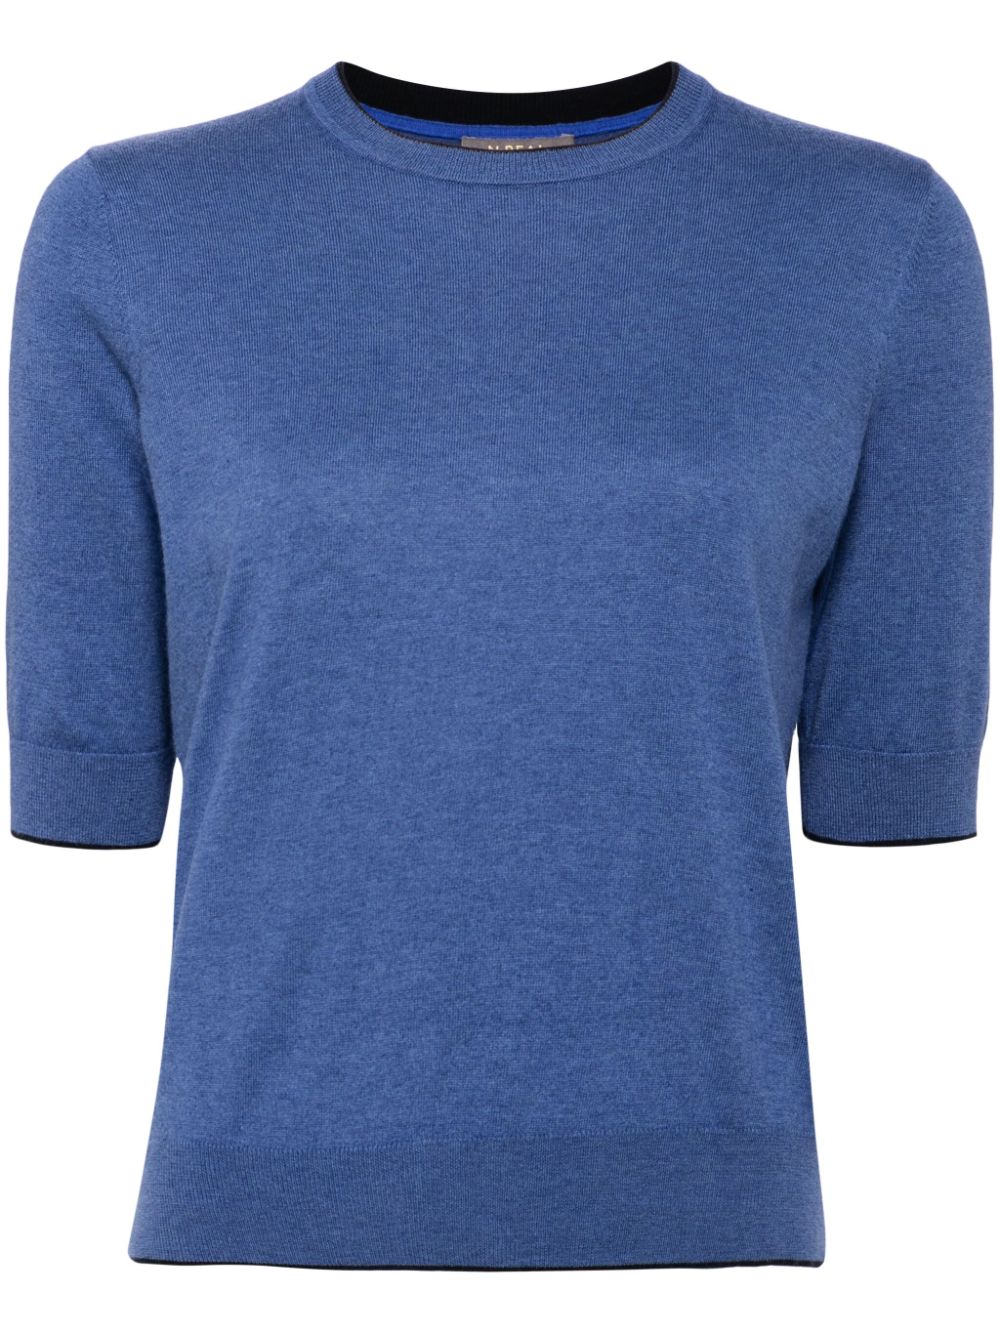 N.Peal Fijngebreid T-shirt Blauw